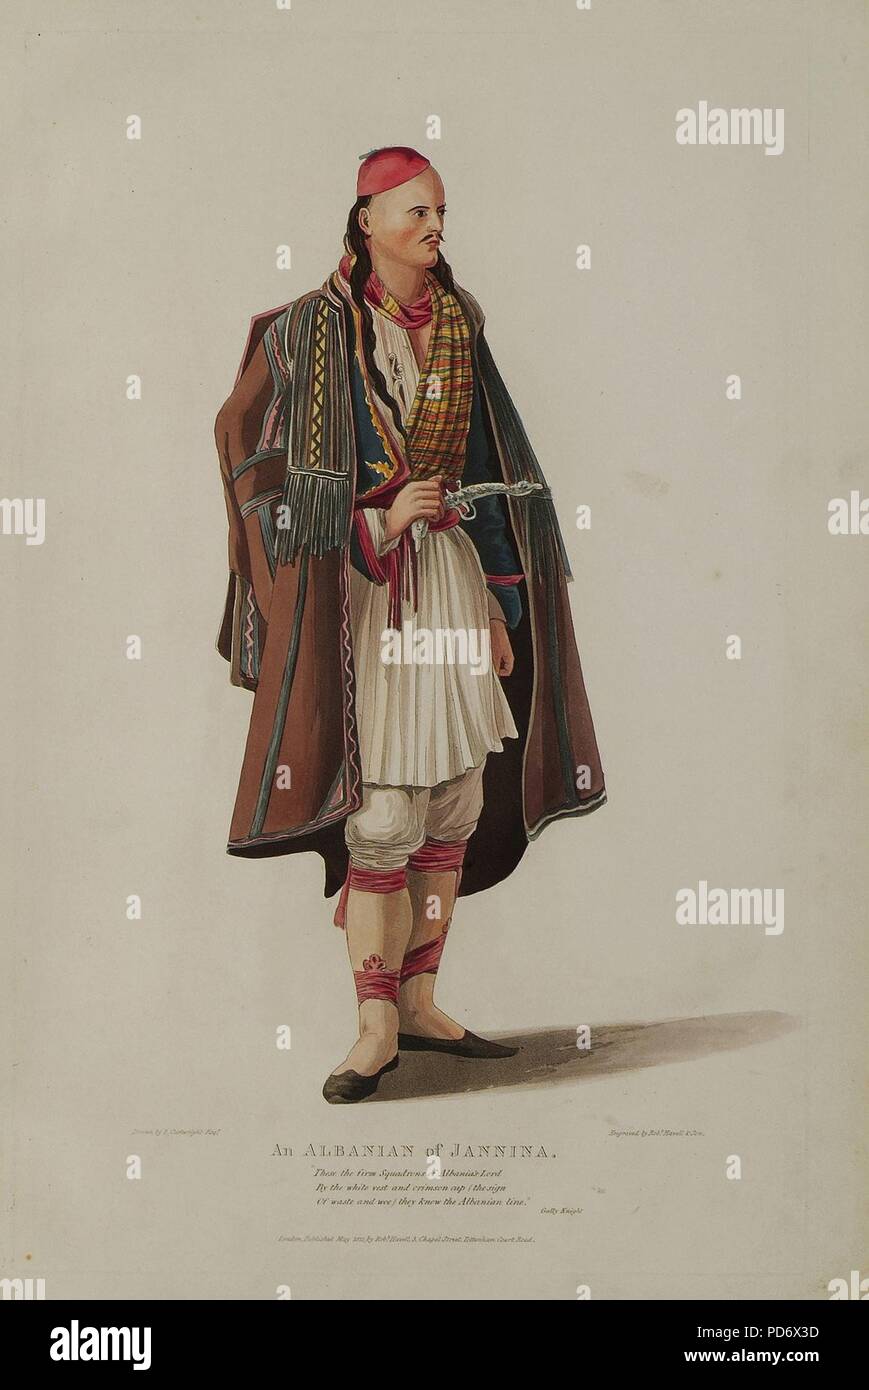 An Albanian of Jannina - Cartwright Joseph - 1822. Stock Photo